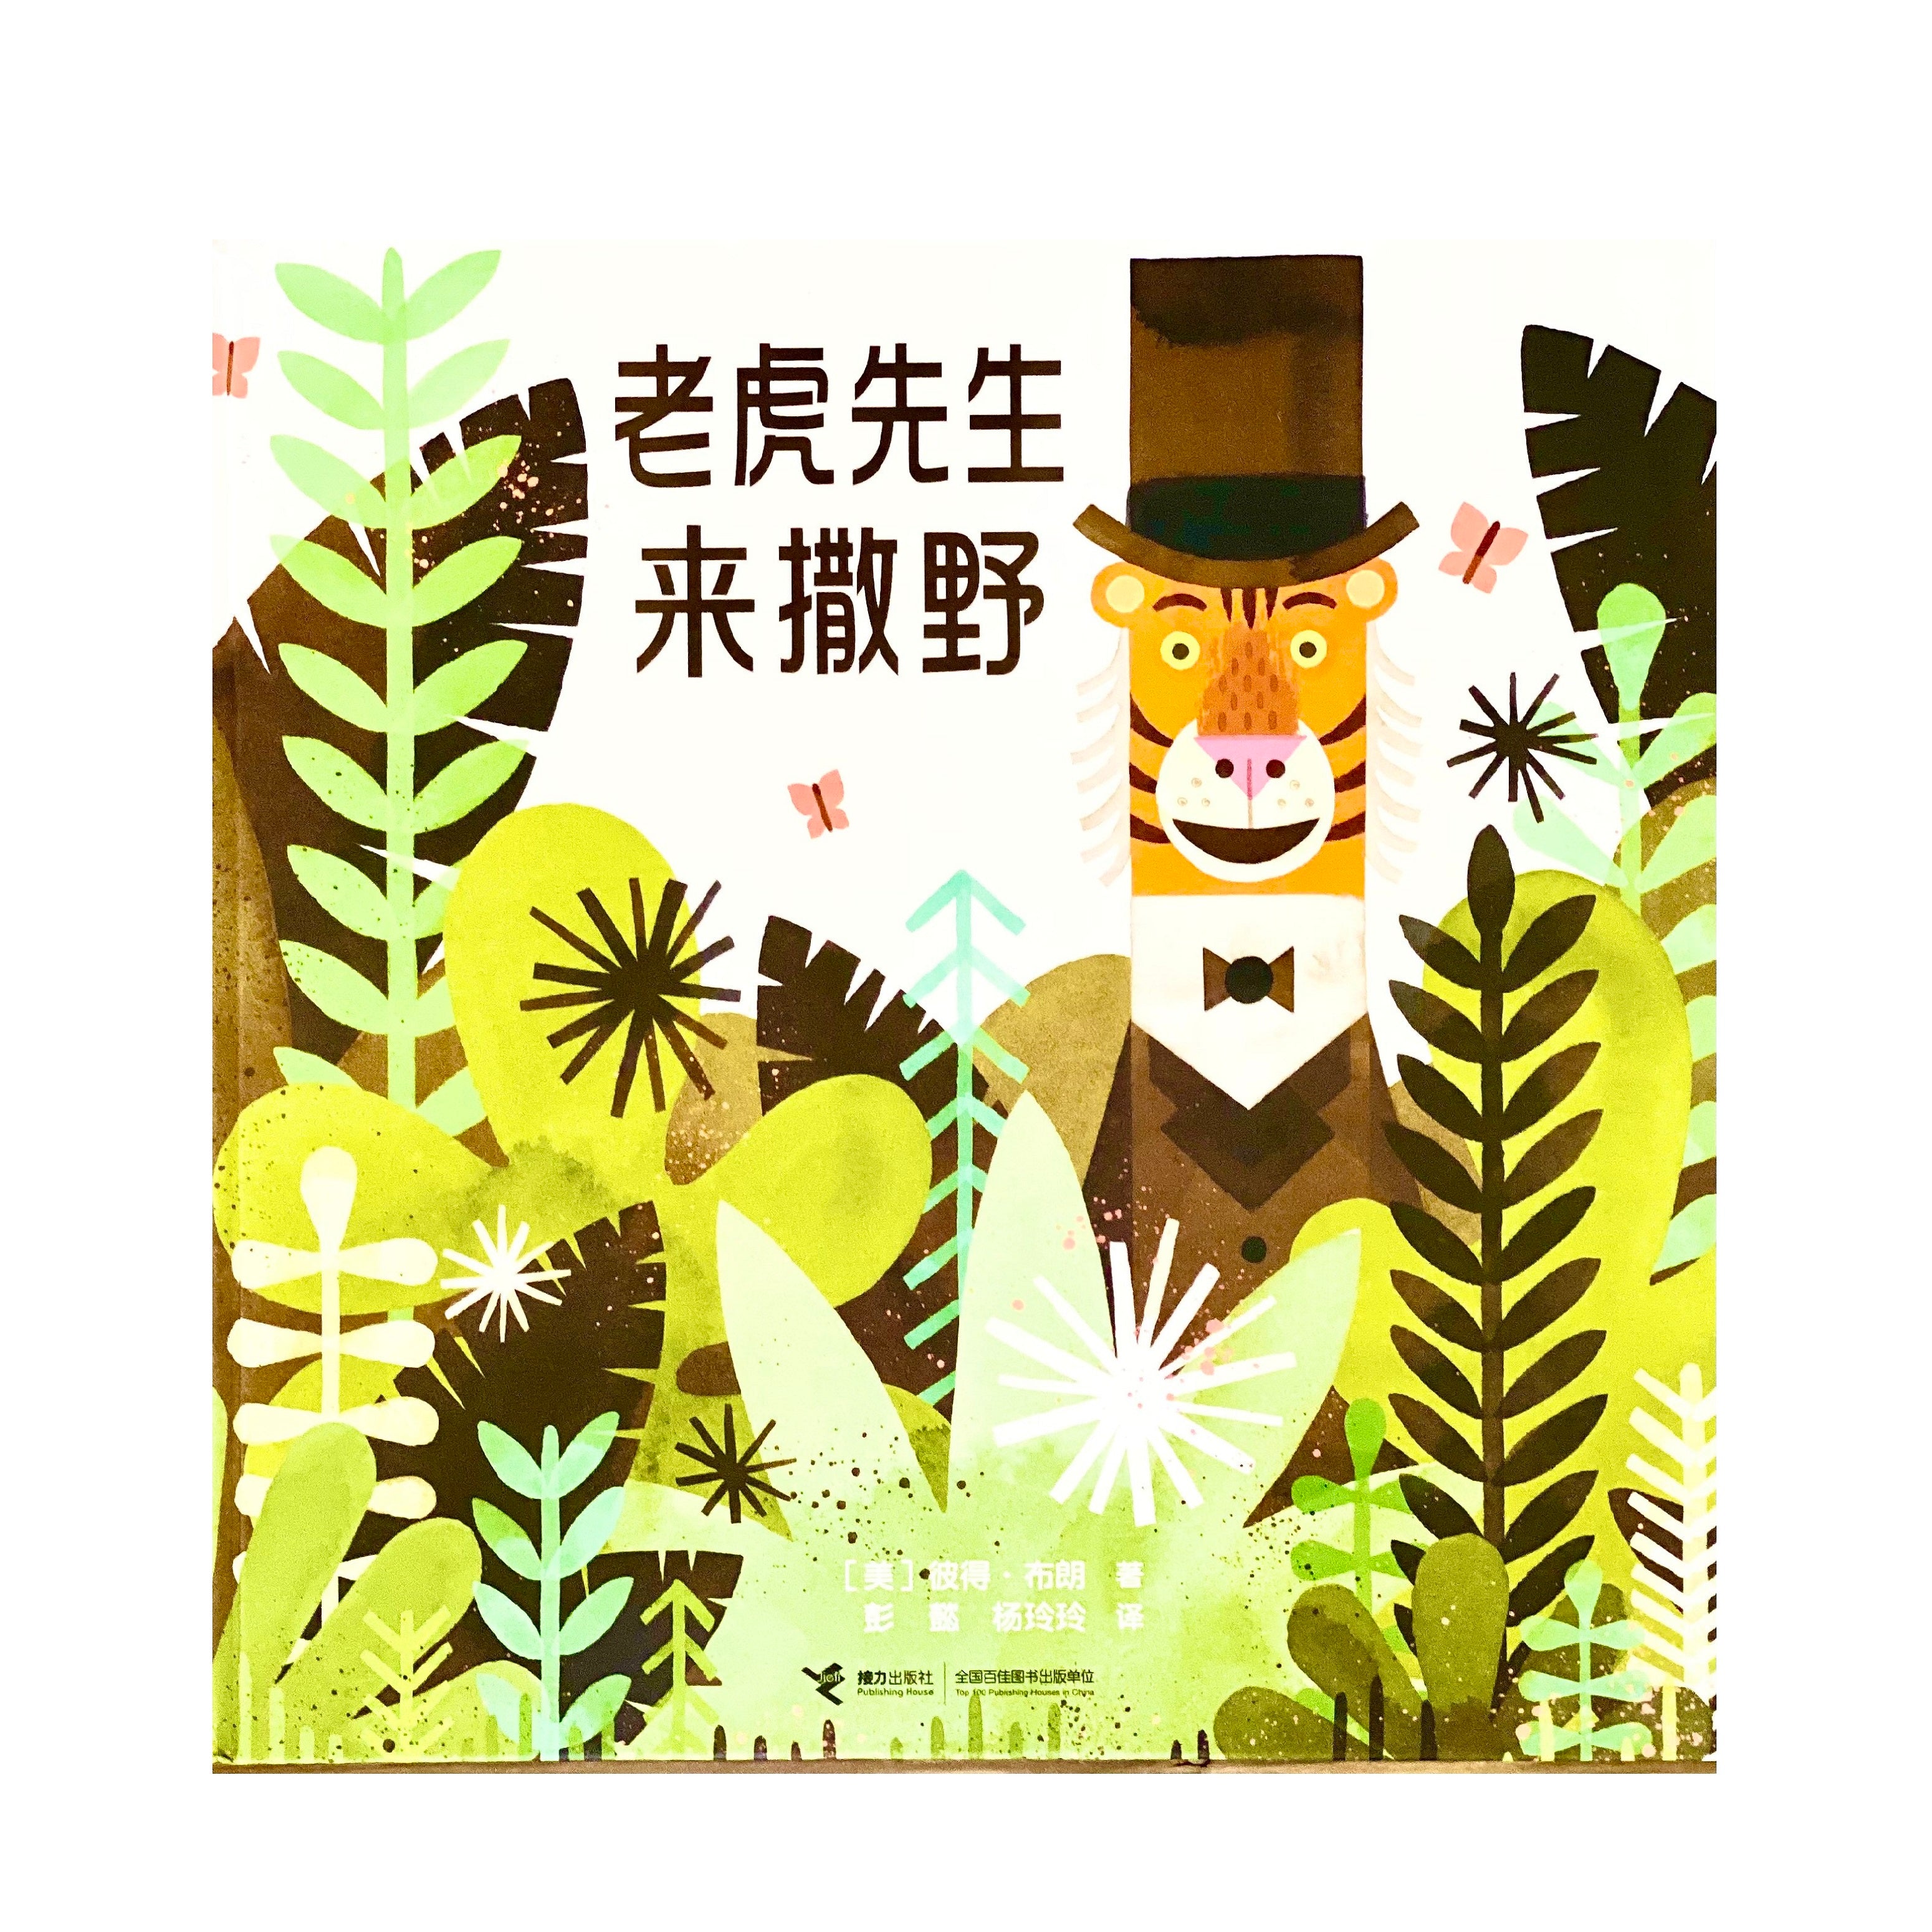 老虎先生来撒野 Mr. Tiger Goes Wild -Chinese Children's Book by Peter Brown